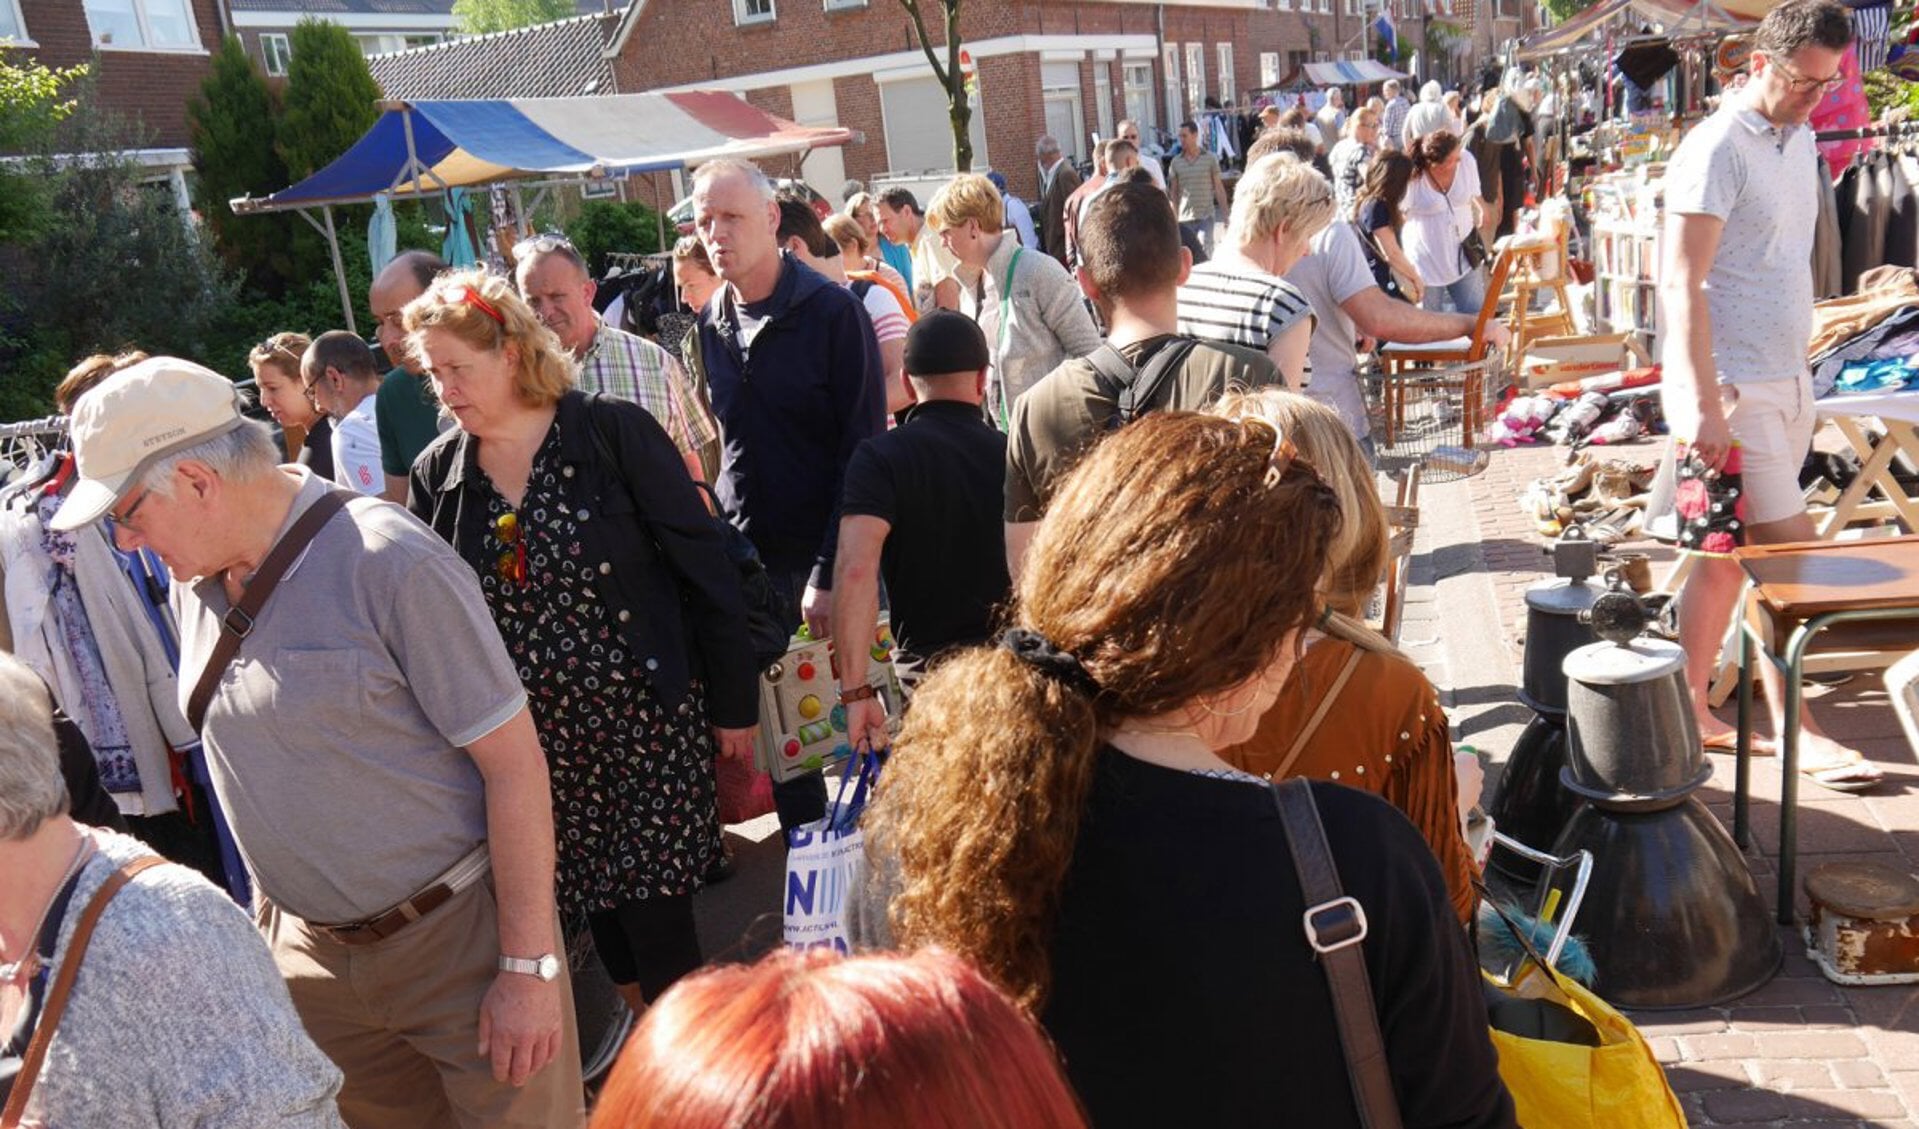 Zonovergoten rommelmarkt Princenhage trekt veel publiek (foto's)